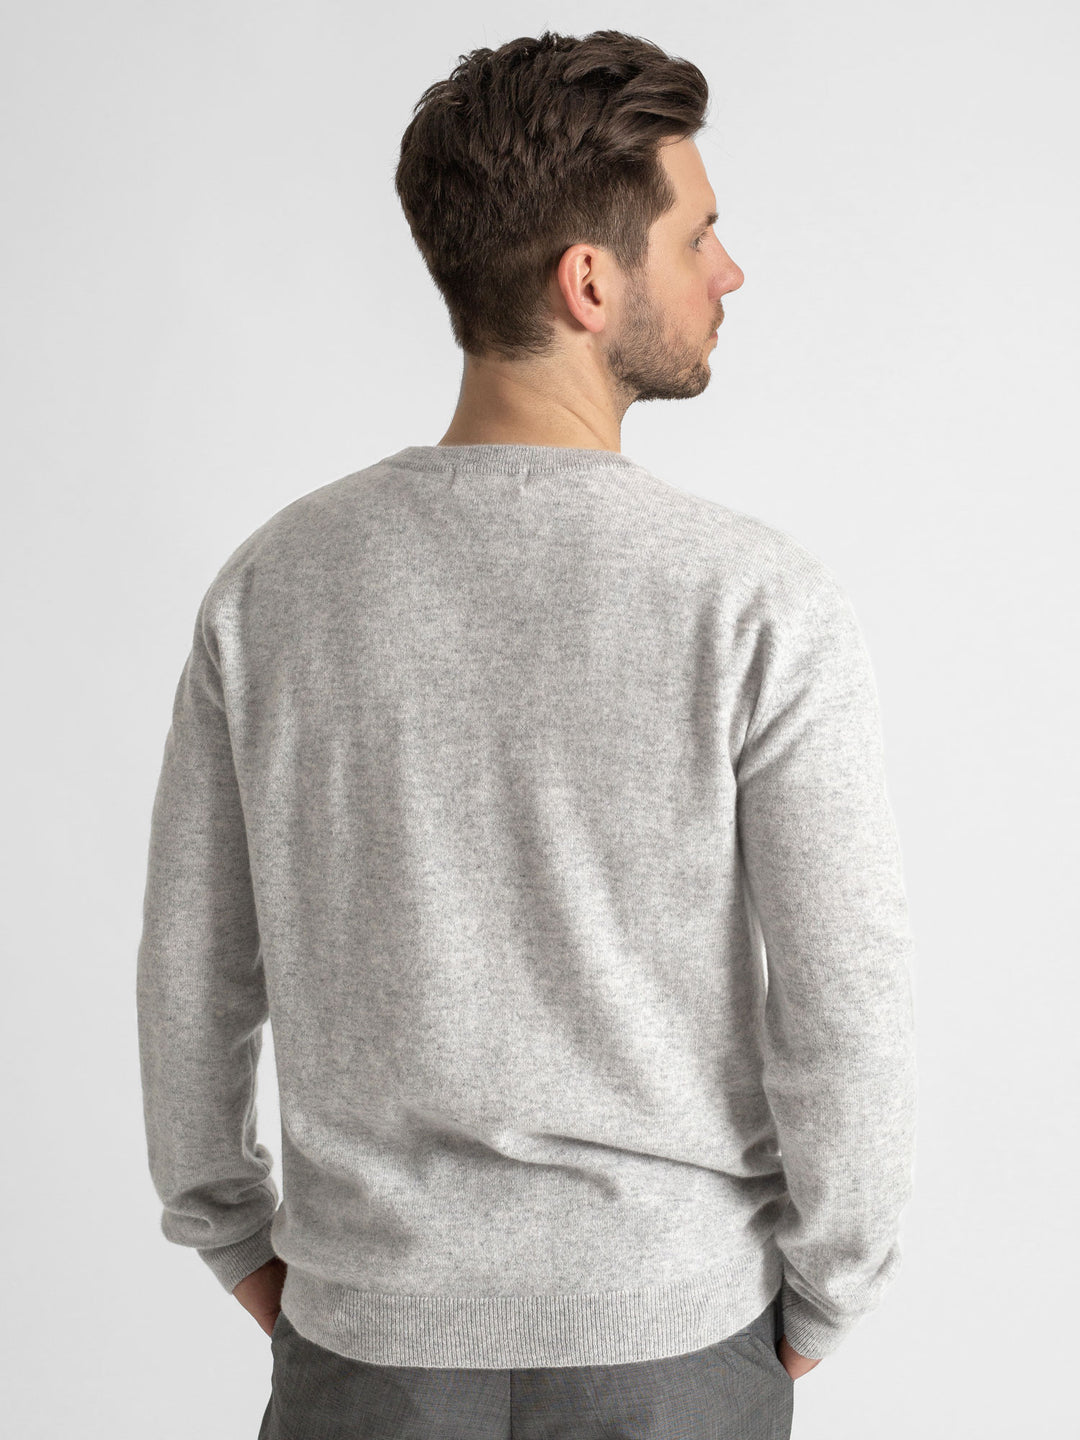 Mens cashmere sweater, v-neck, 100% pure cashmere, soft, warm, Kashmina, world wide shipping.